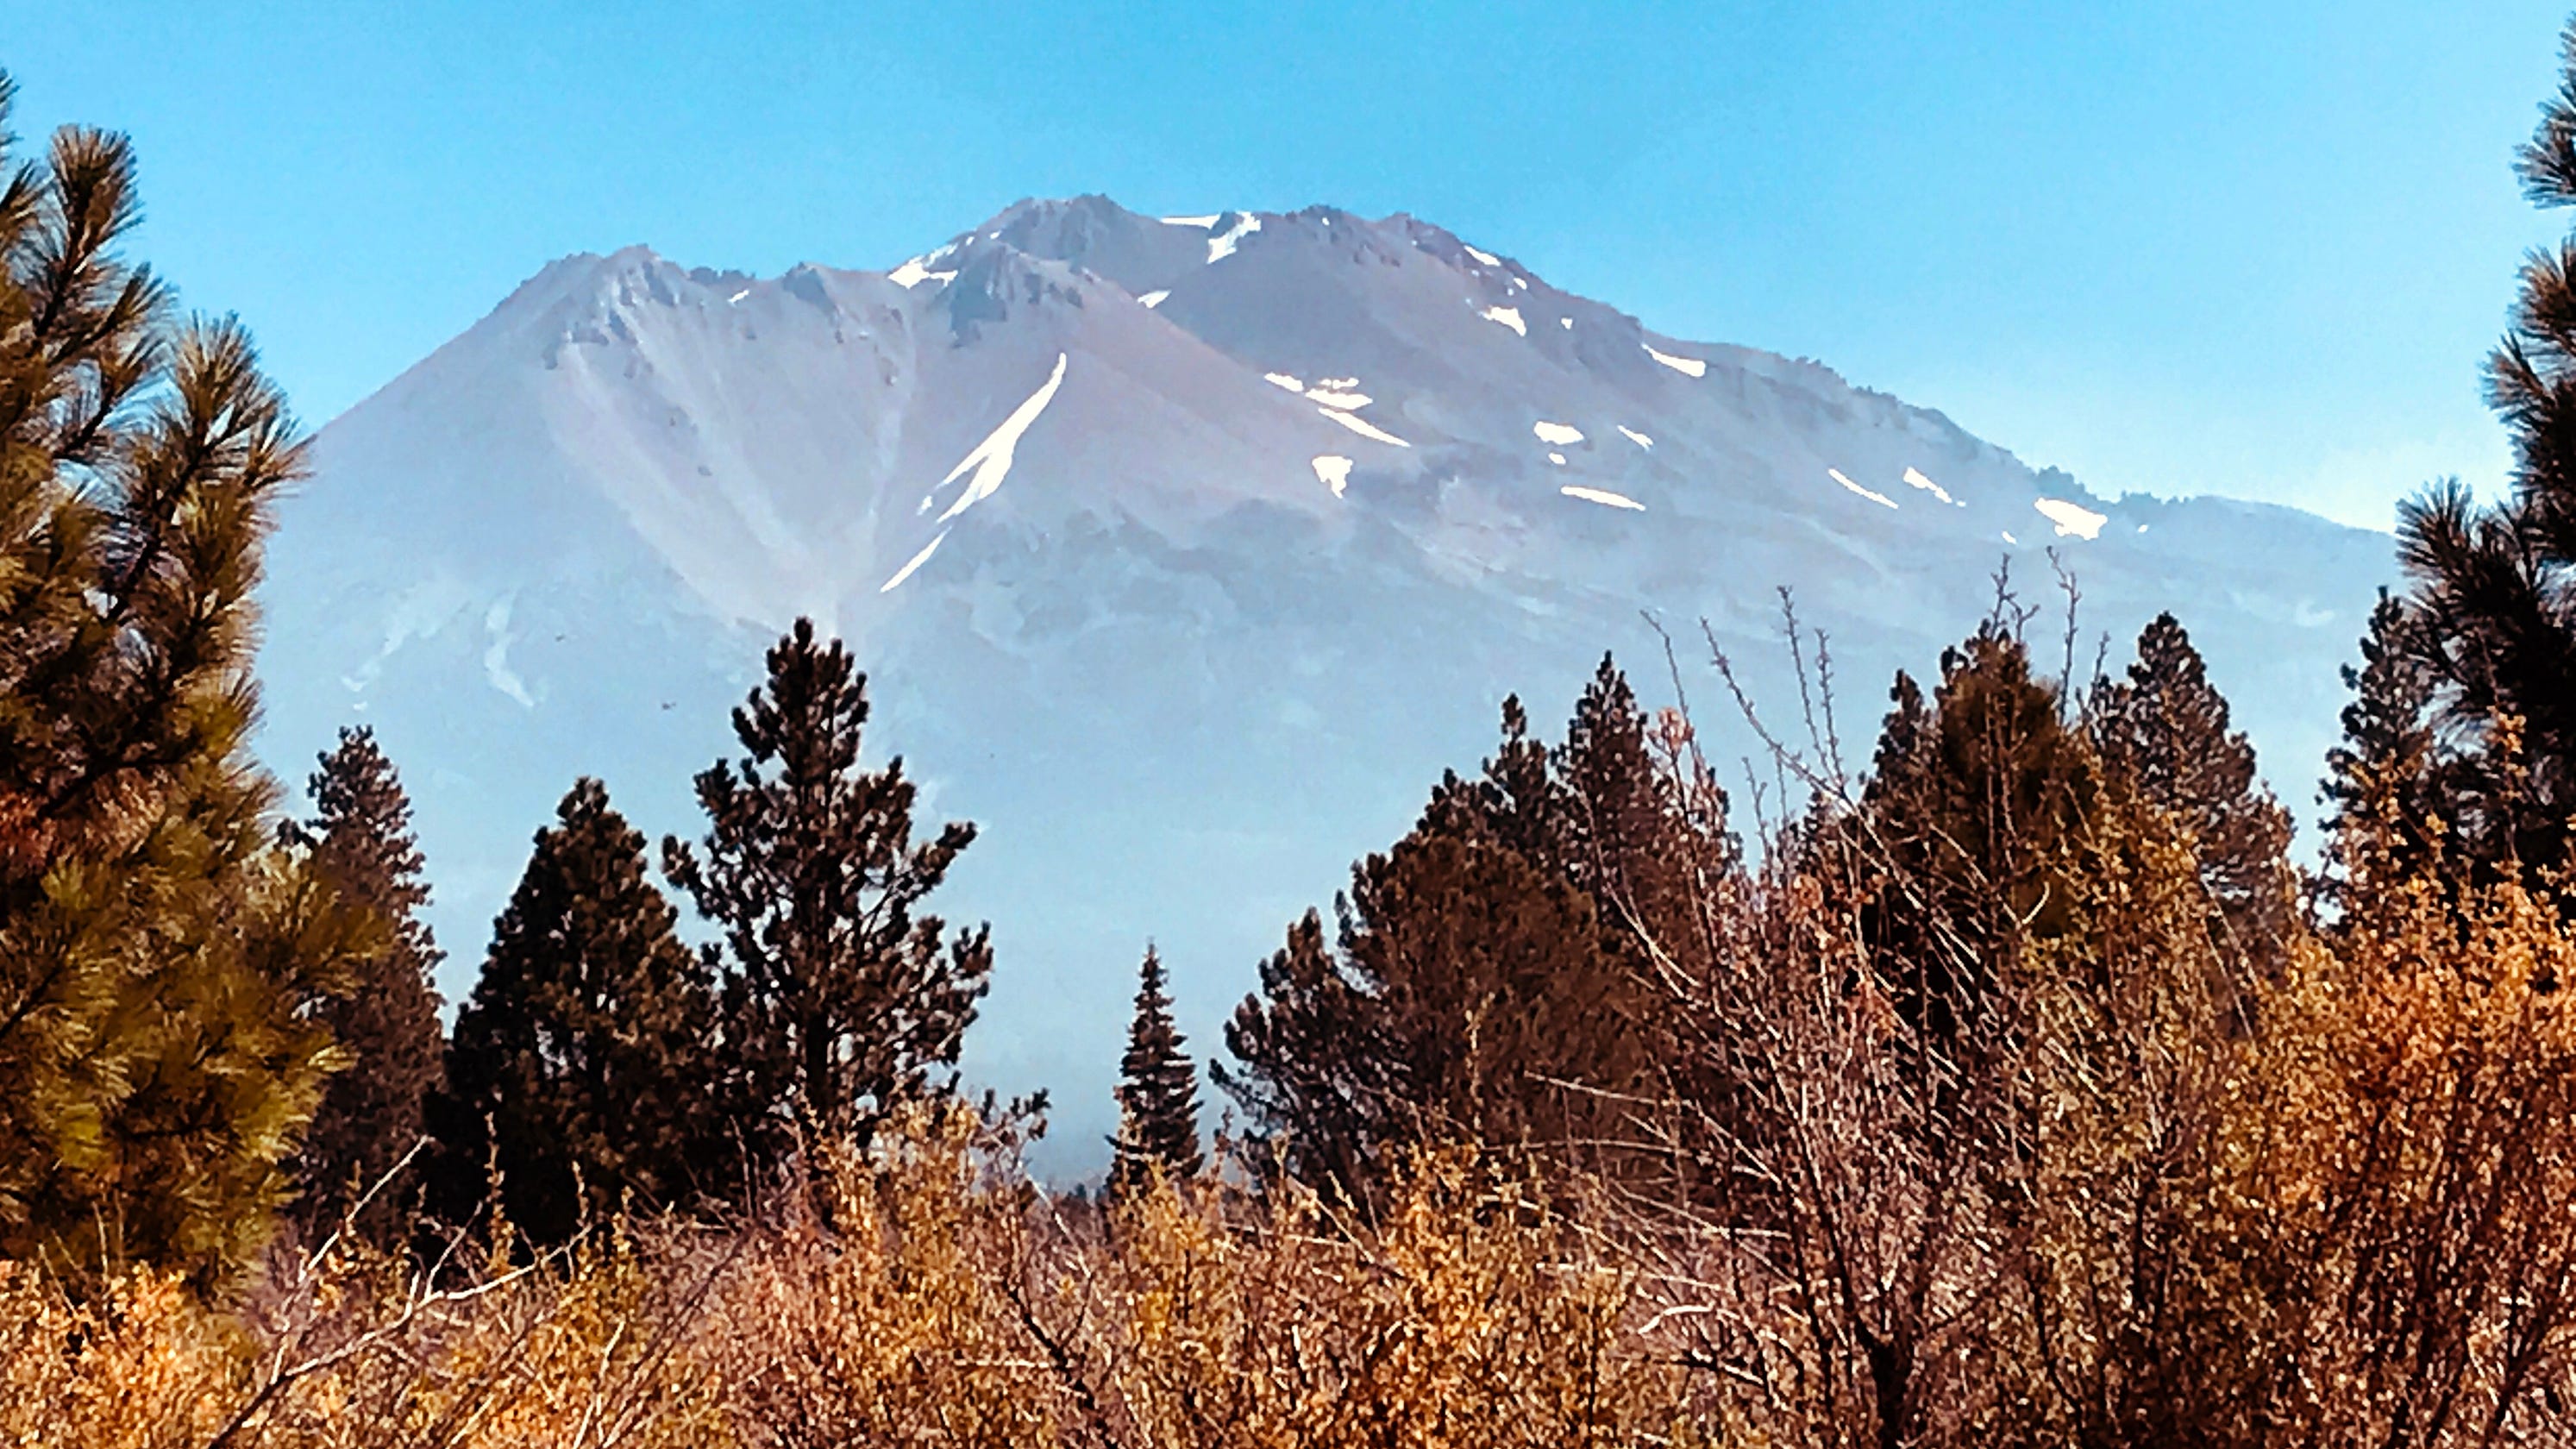 Mt. Shasta among 'very high threat' volcanoes